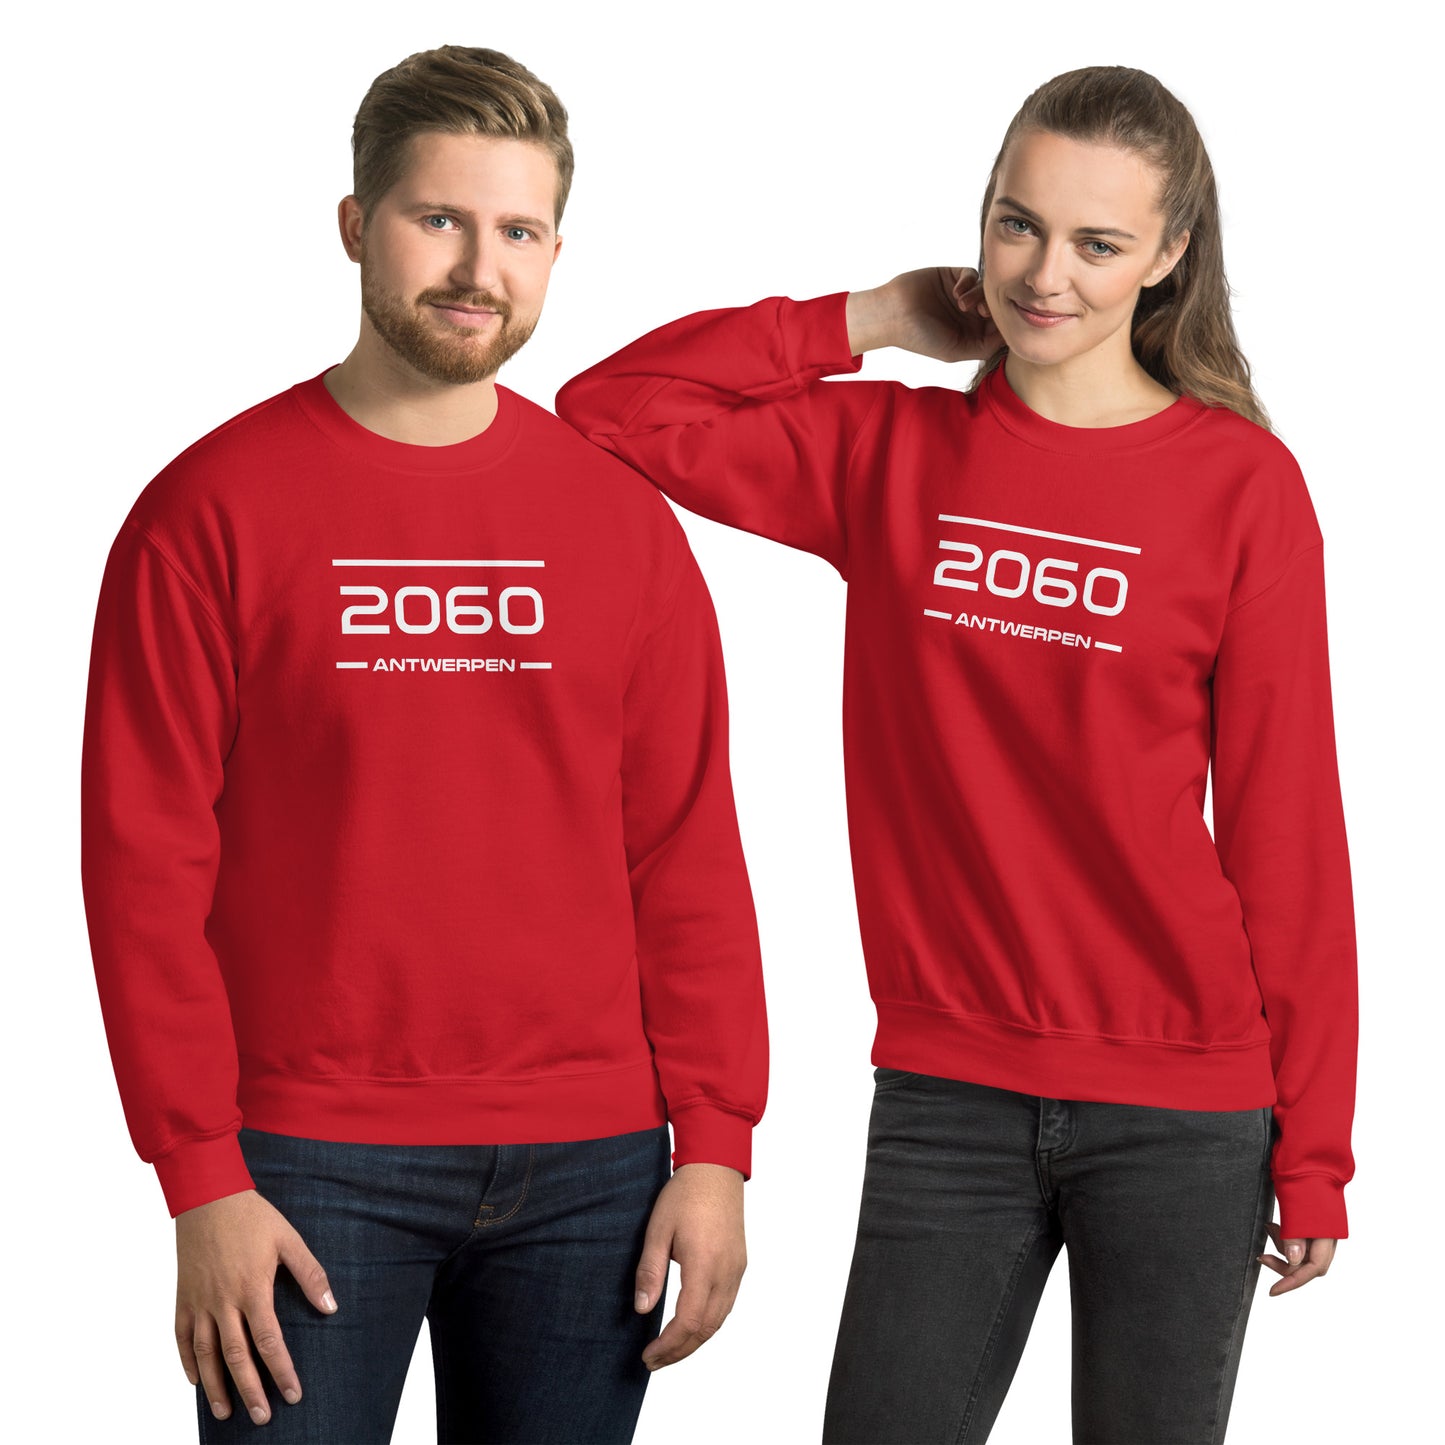 Sweater - 2060 - Antwerpen (M/V)